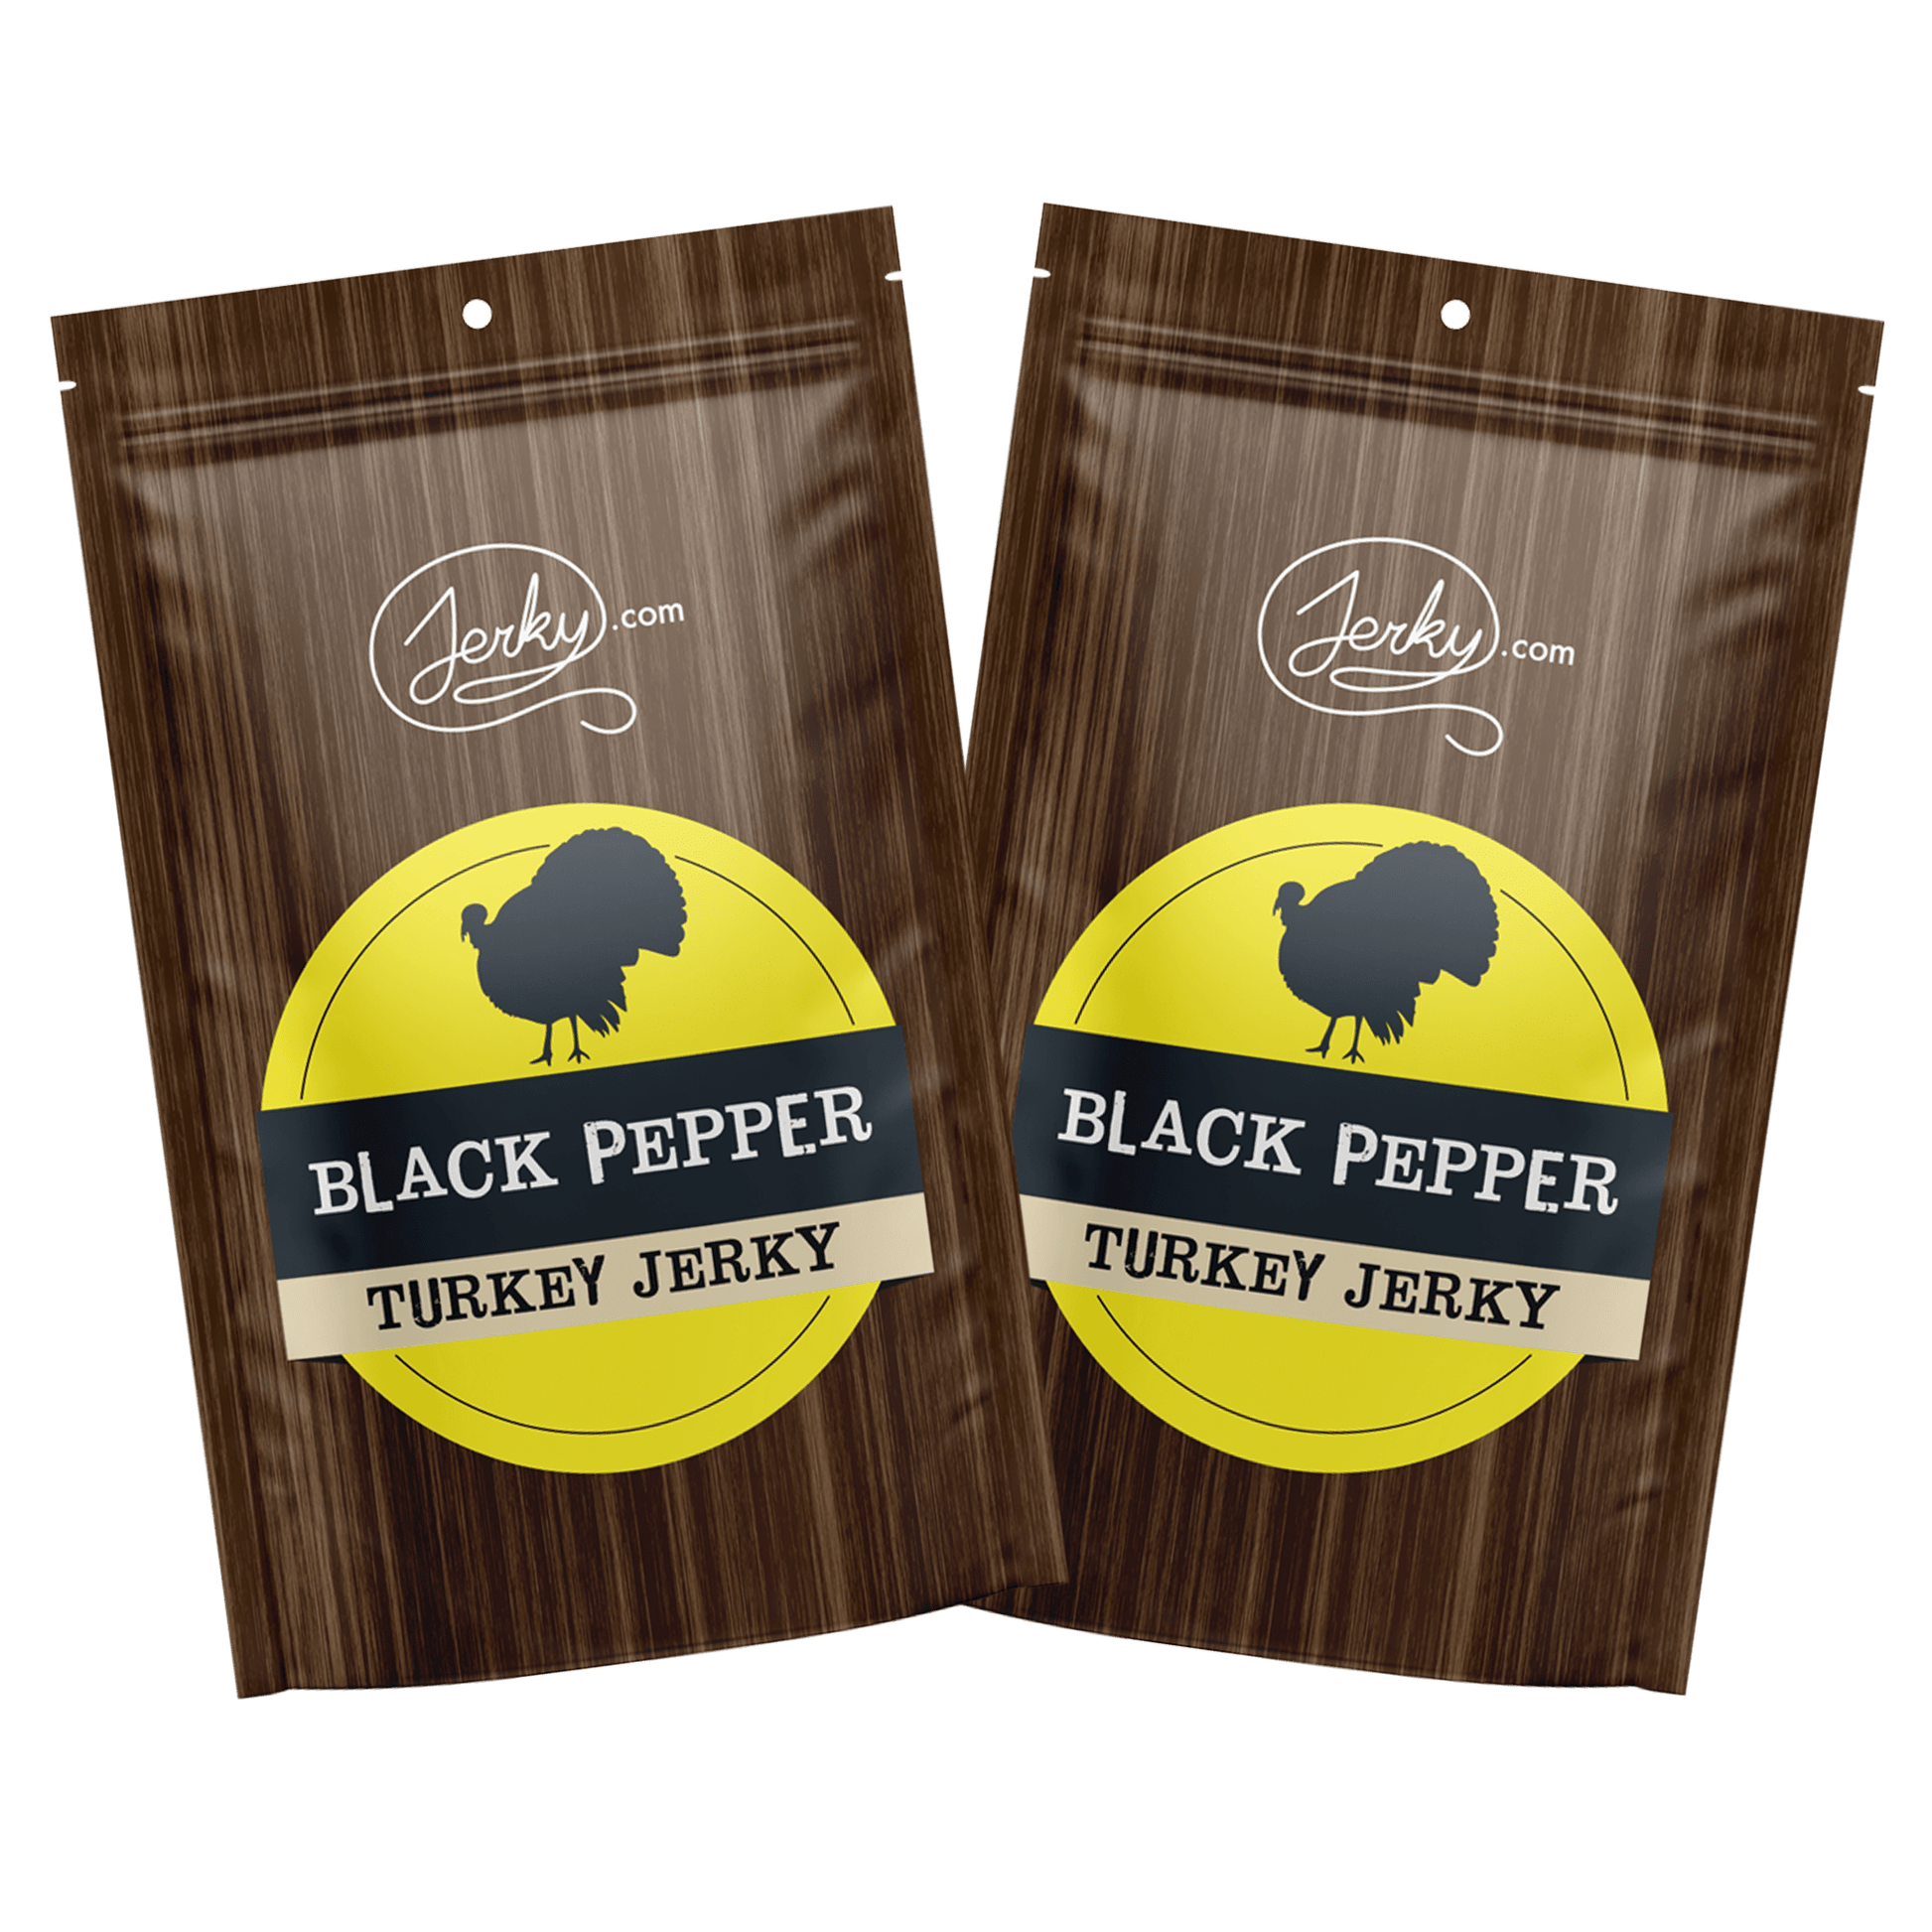 All-Natural Turkey Jerky - Black Pepper by Jerky.com